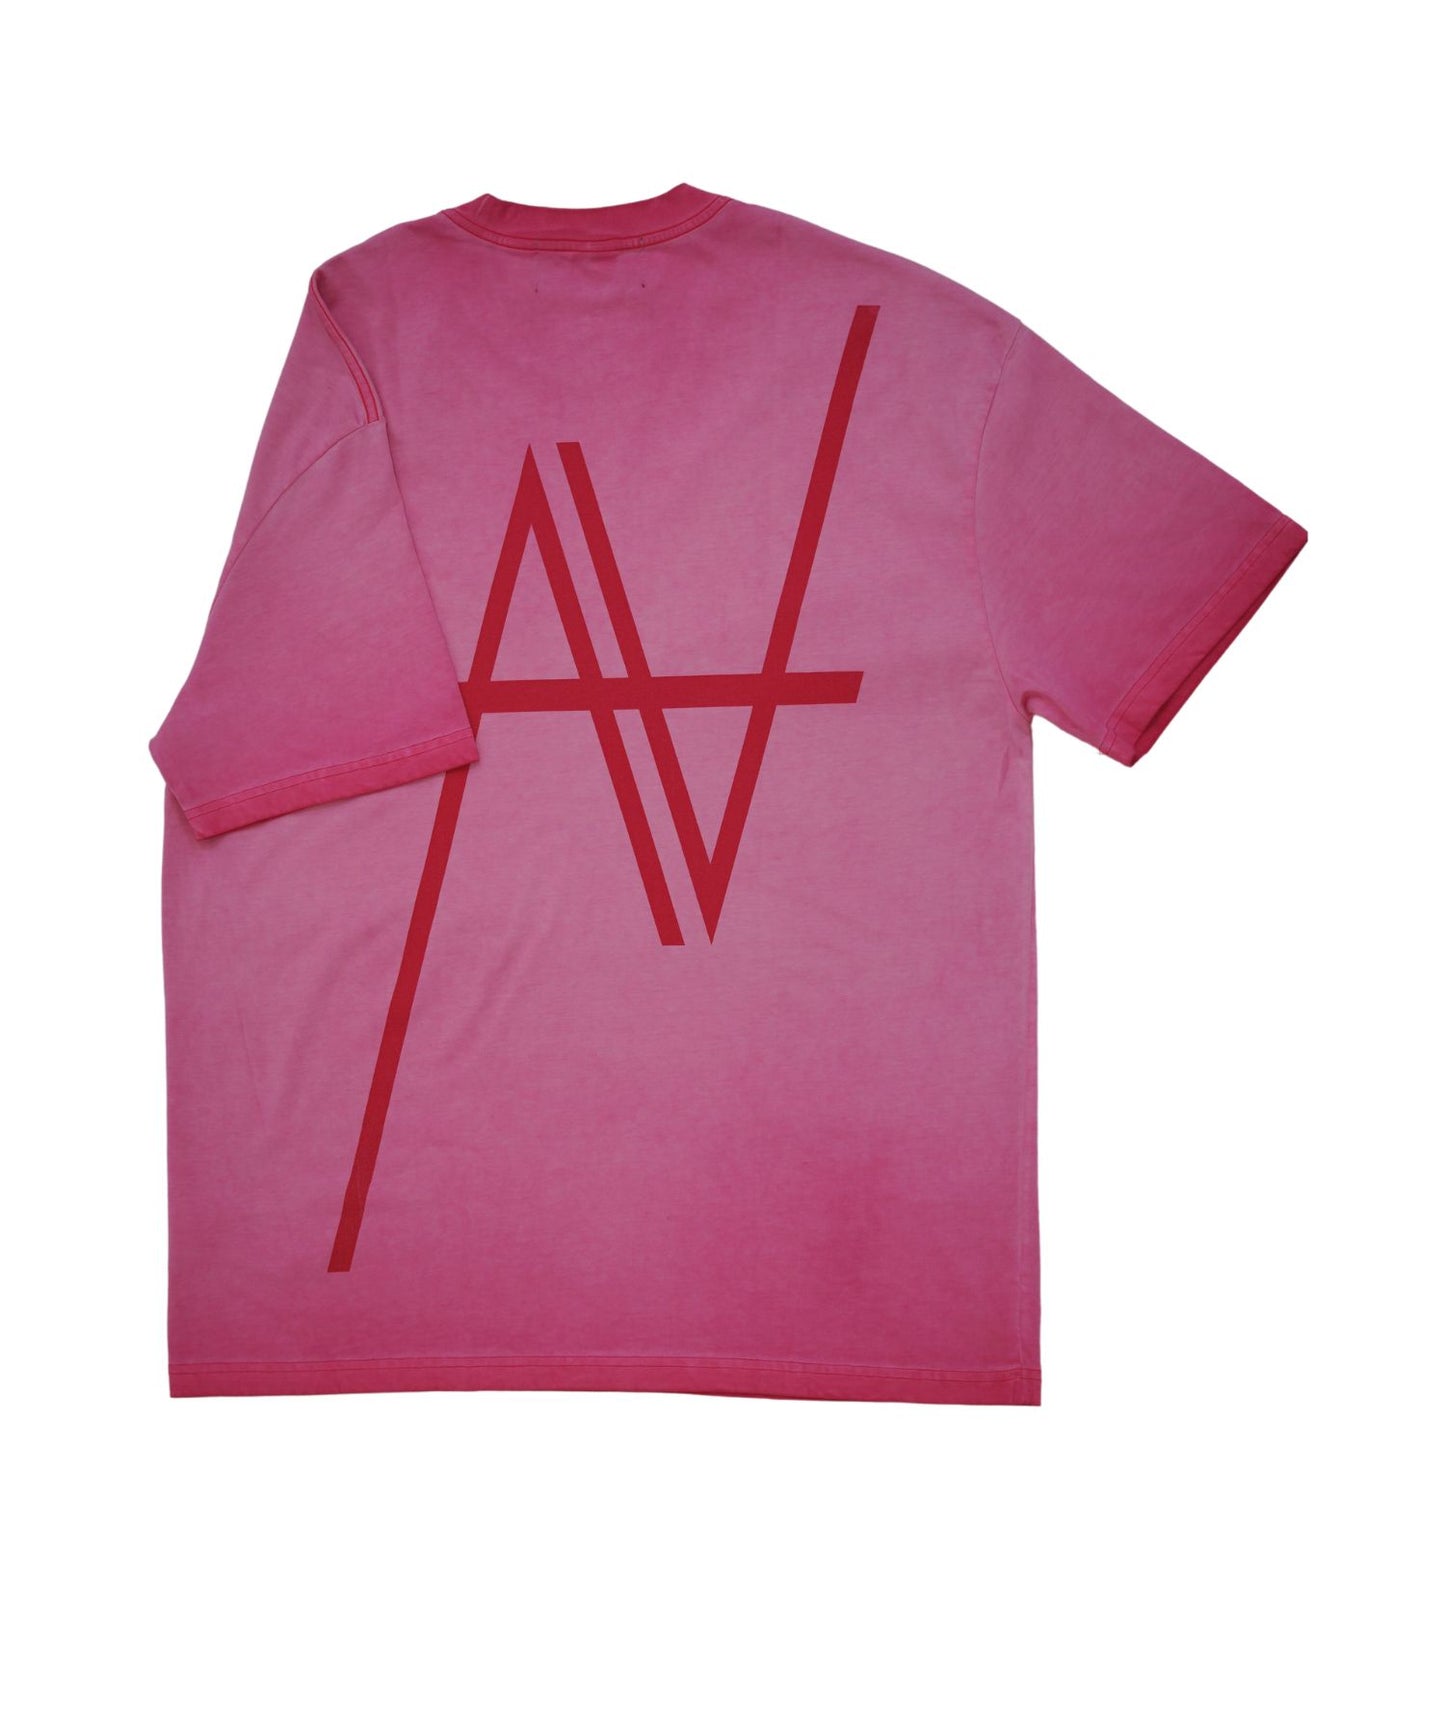 Artchimia oversize t-shirt